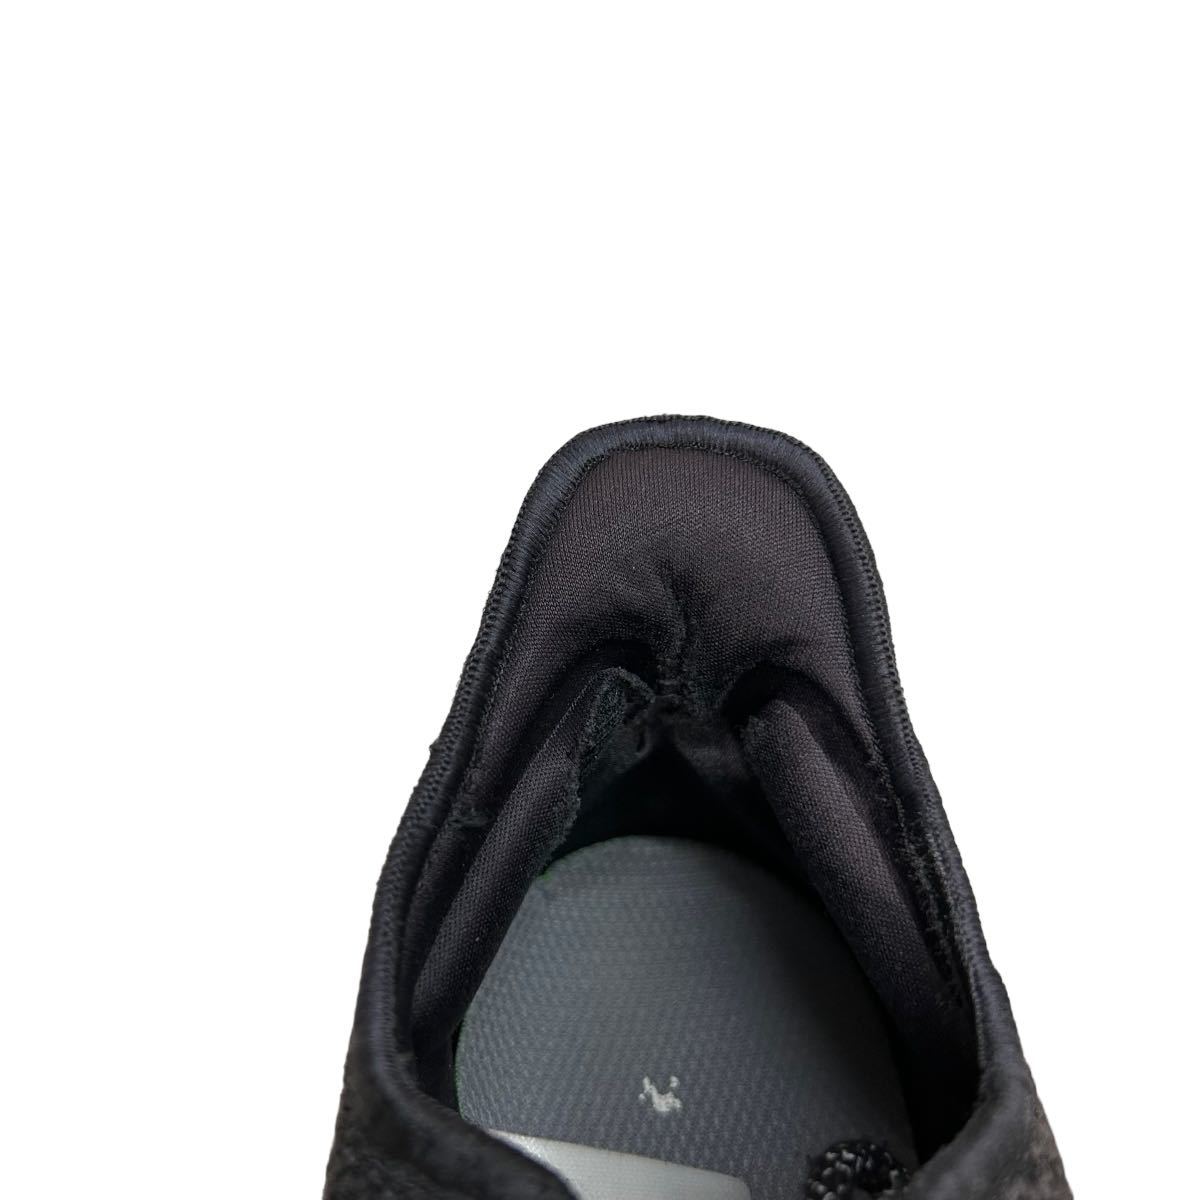 BC818 adidas Adidas SenseBounce+ men's sneakers US8.5 26.5cm black white mesh 